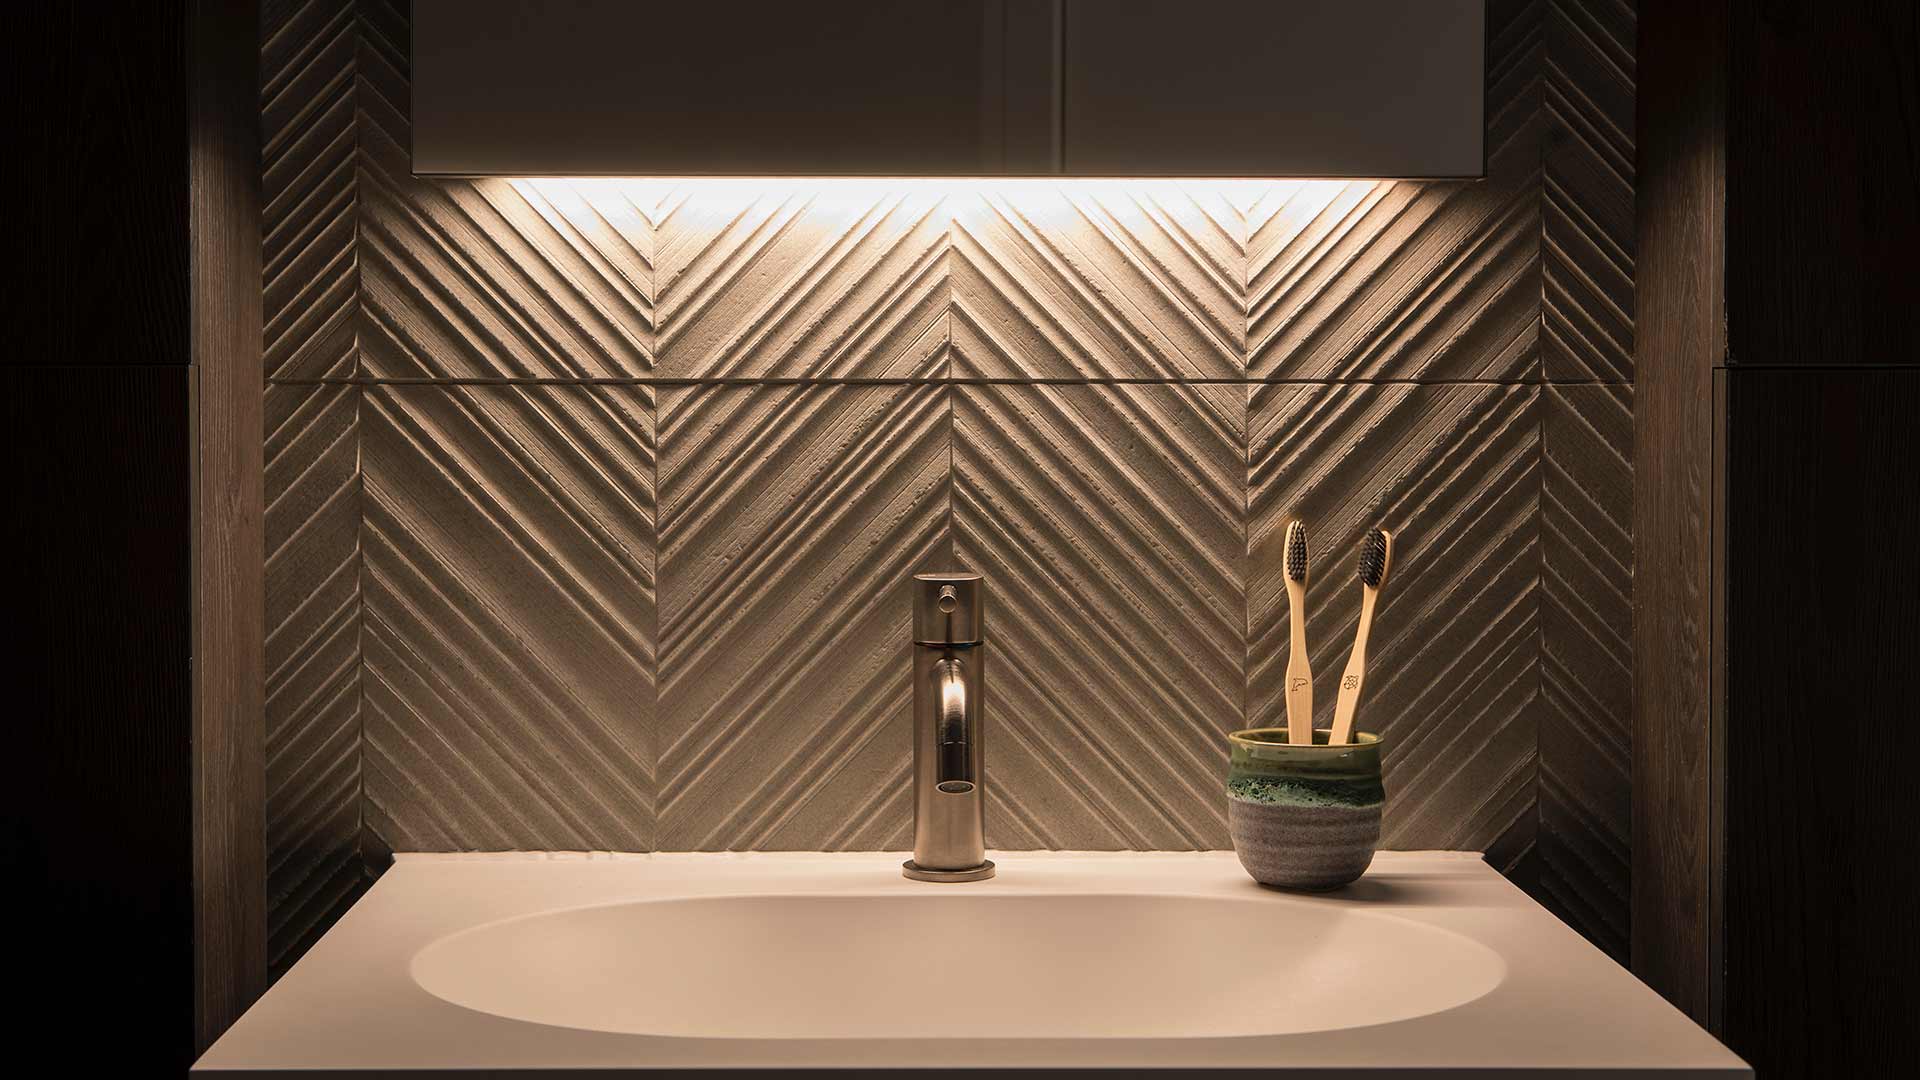 Bathroom Lighting Design Sink Unit Illuminated Textured Tiles Designers Nulty